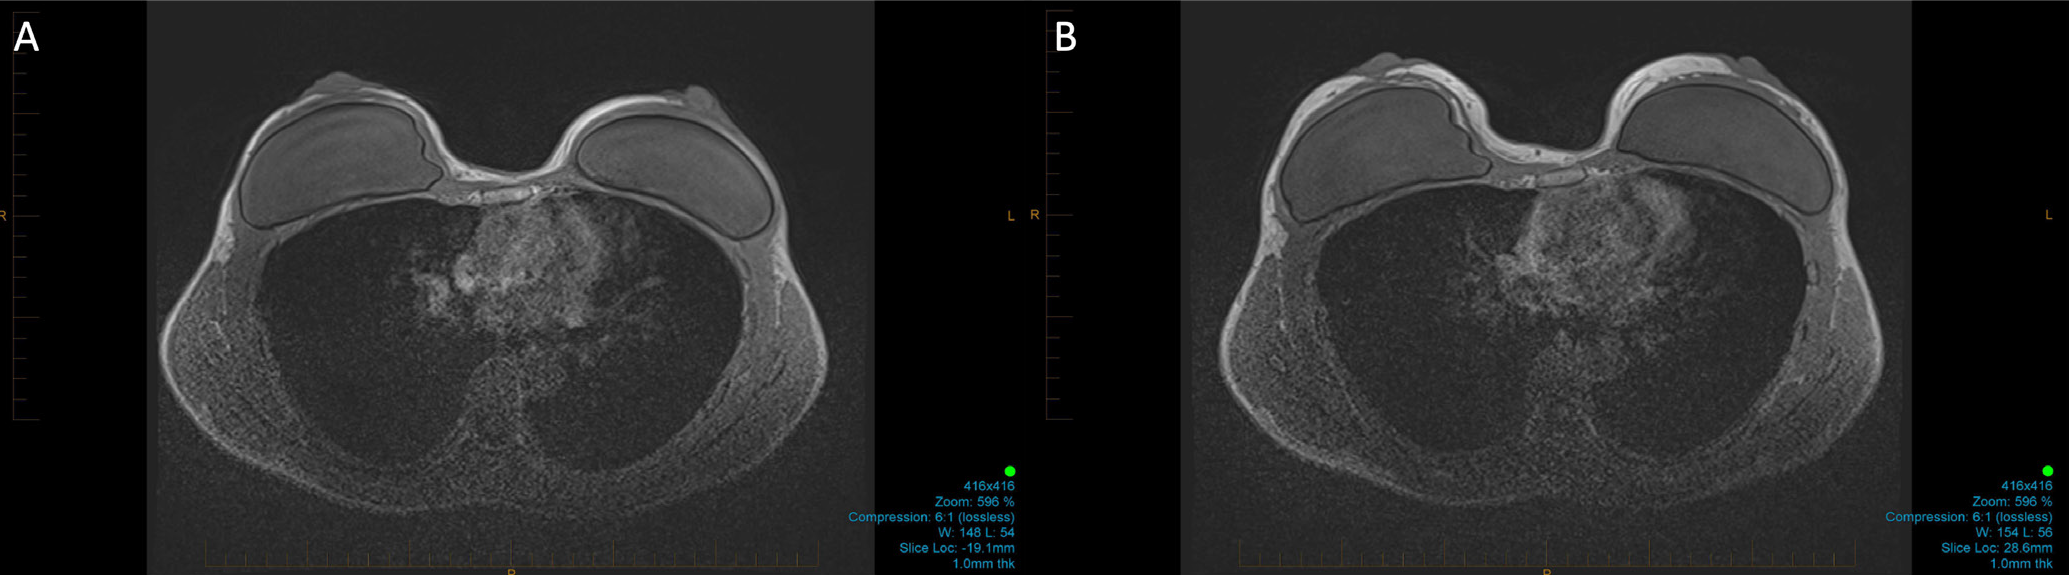 Volumetric assessment of fat graft retention over implant by MRI